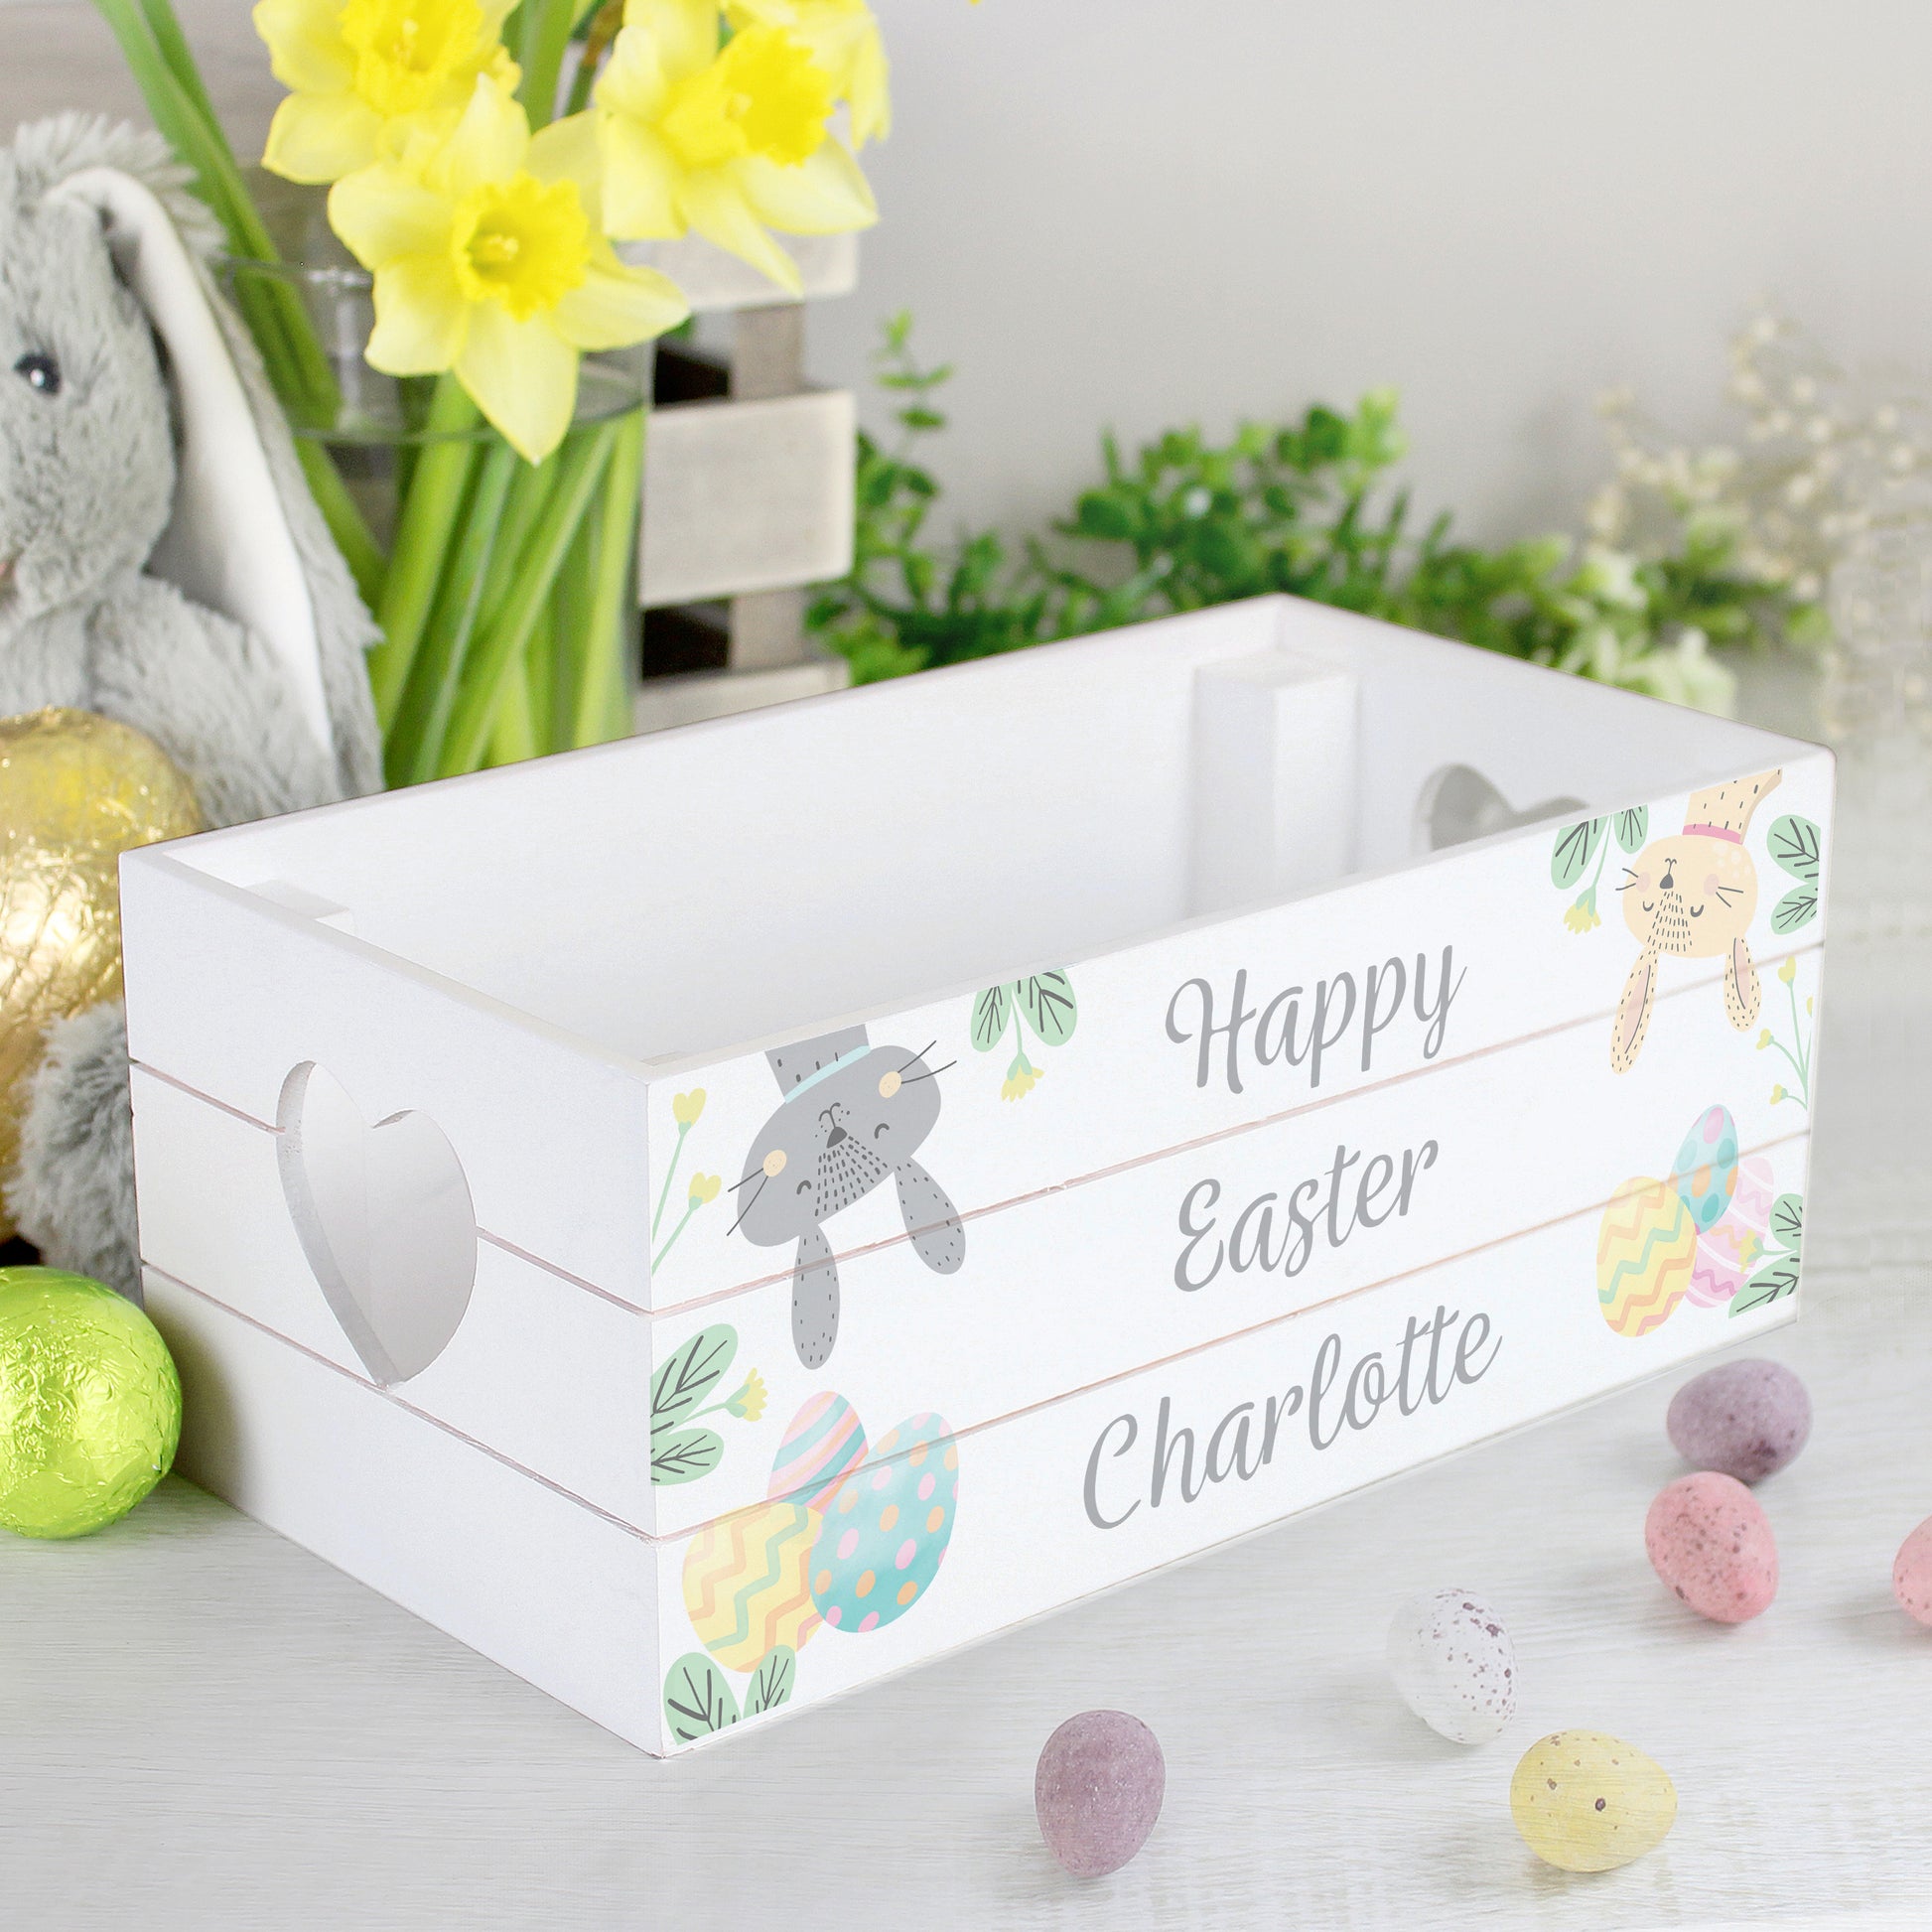 Personalised Wooden Easter Crate - Violet Belle Gifts - Easter personalised wooden crate